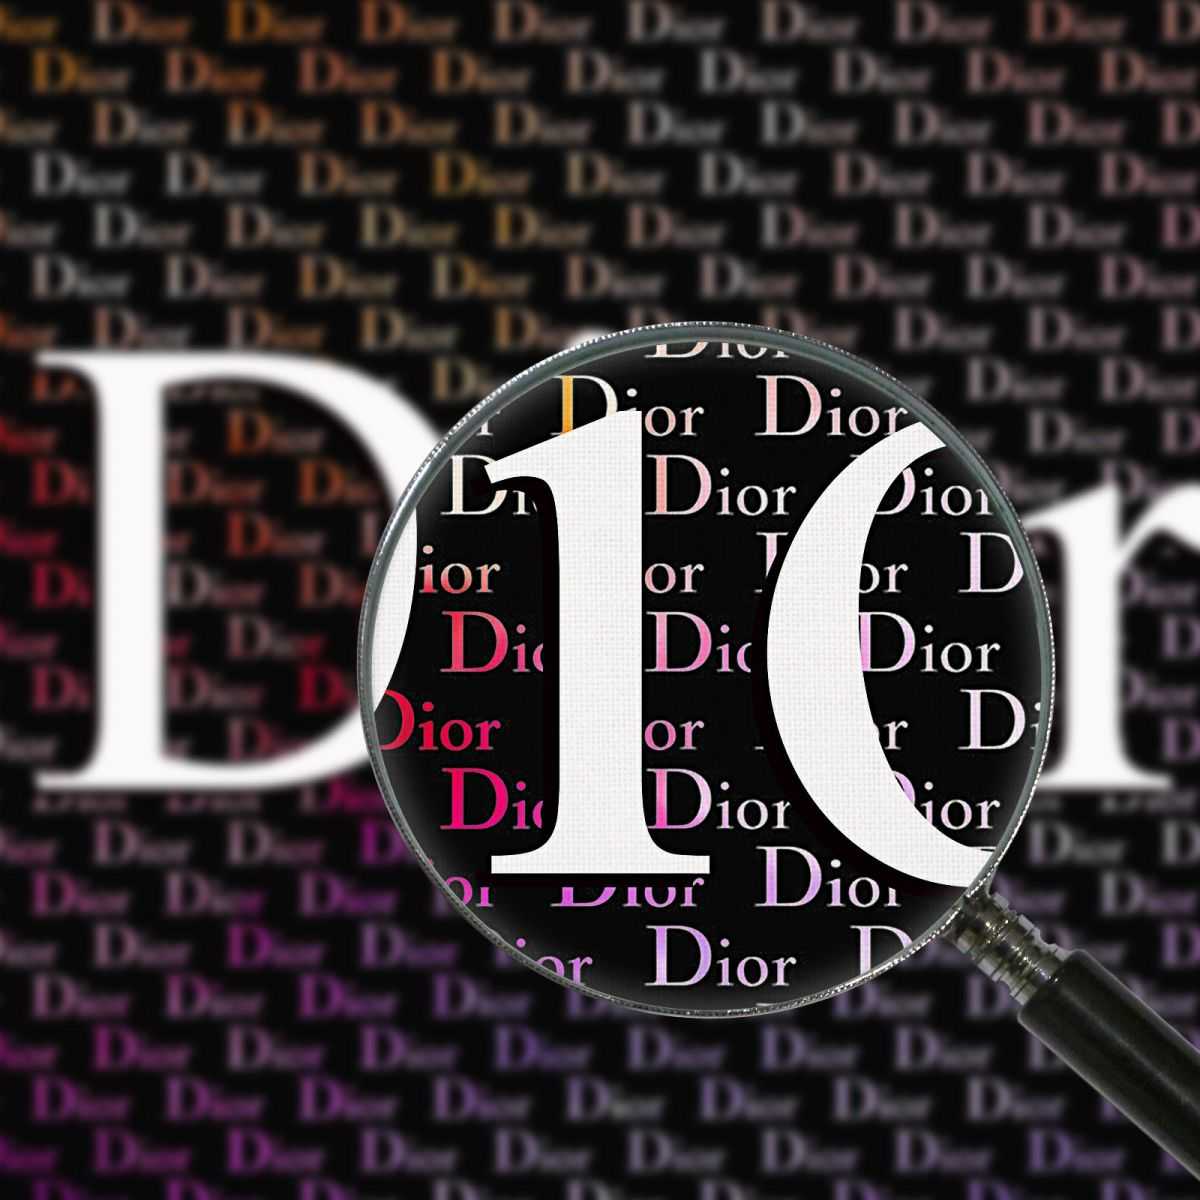 Dior rainbow logos decorative